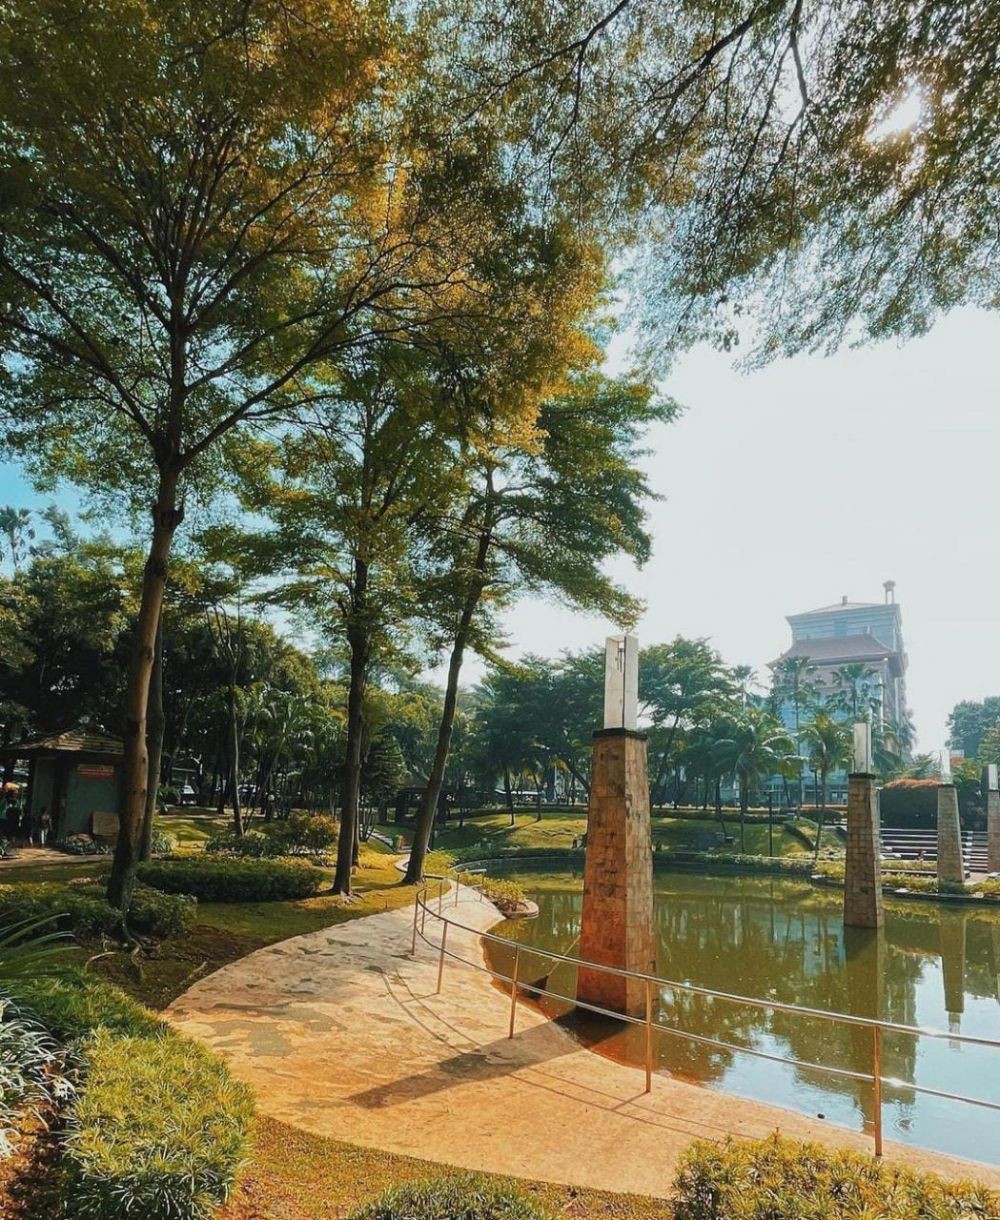 Daftar 10 Taman di Jakarta yang Instagramable Banget buat Millennials